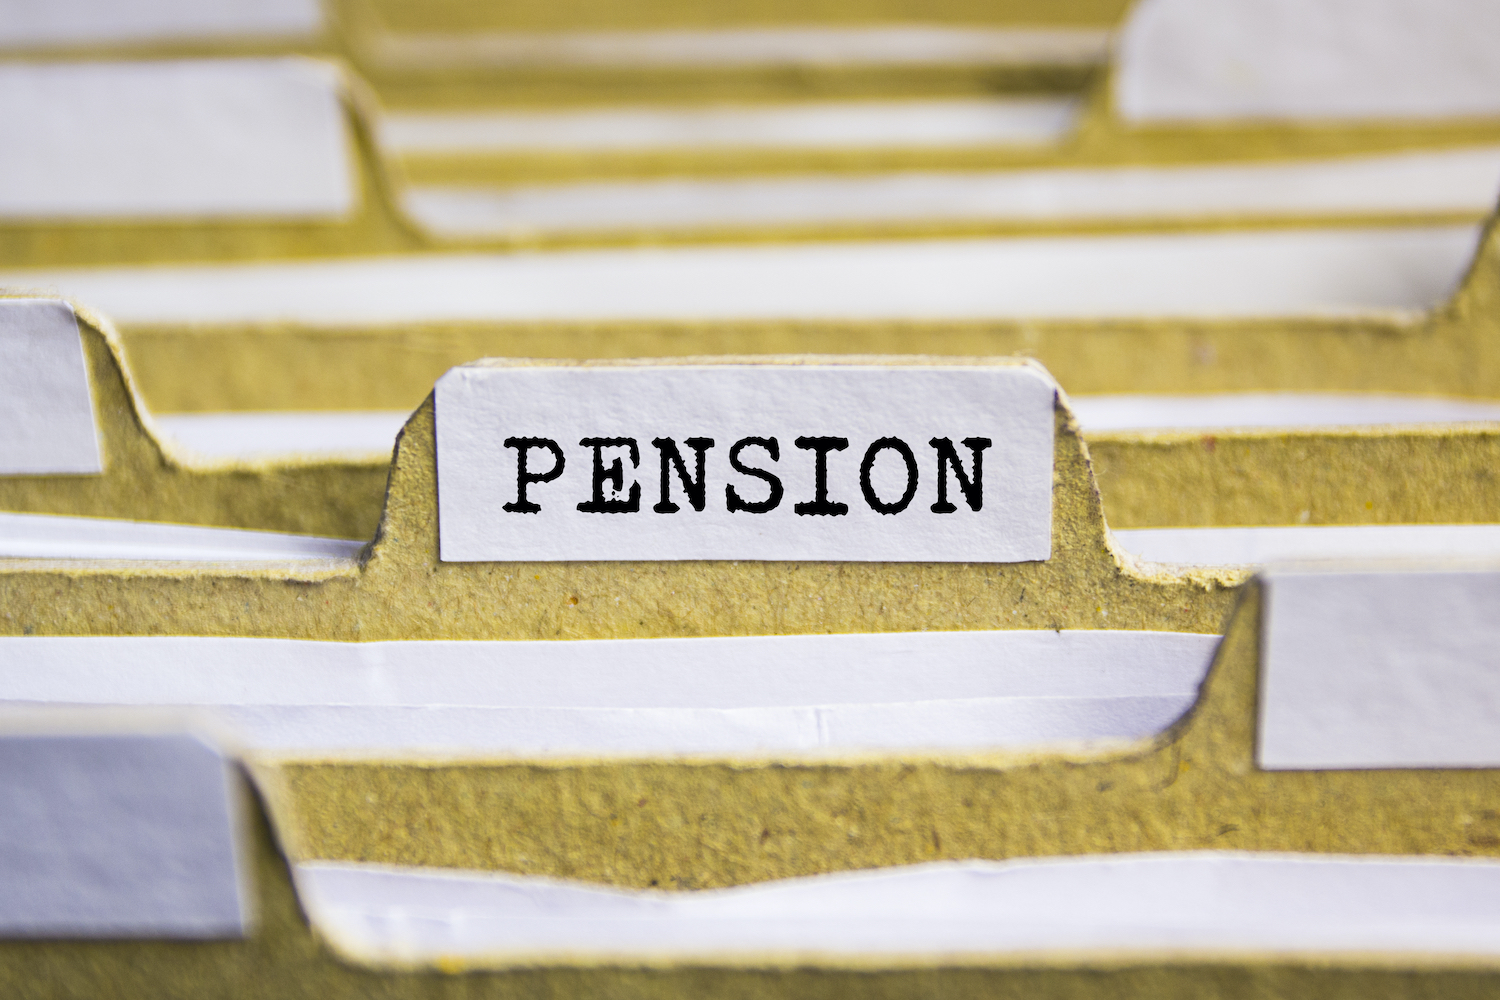 Pension freedoms inquiry